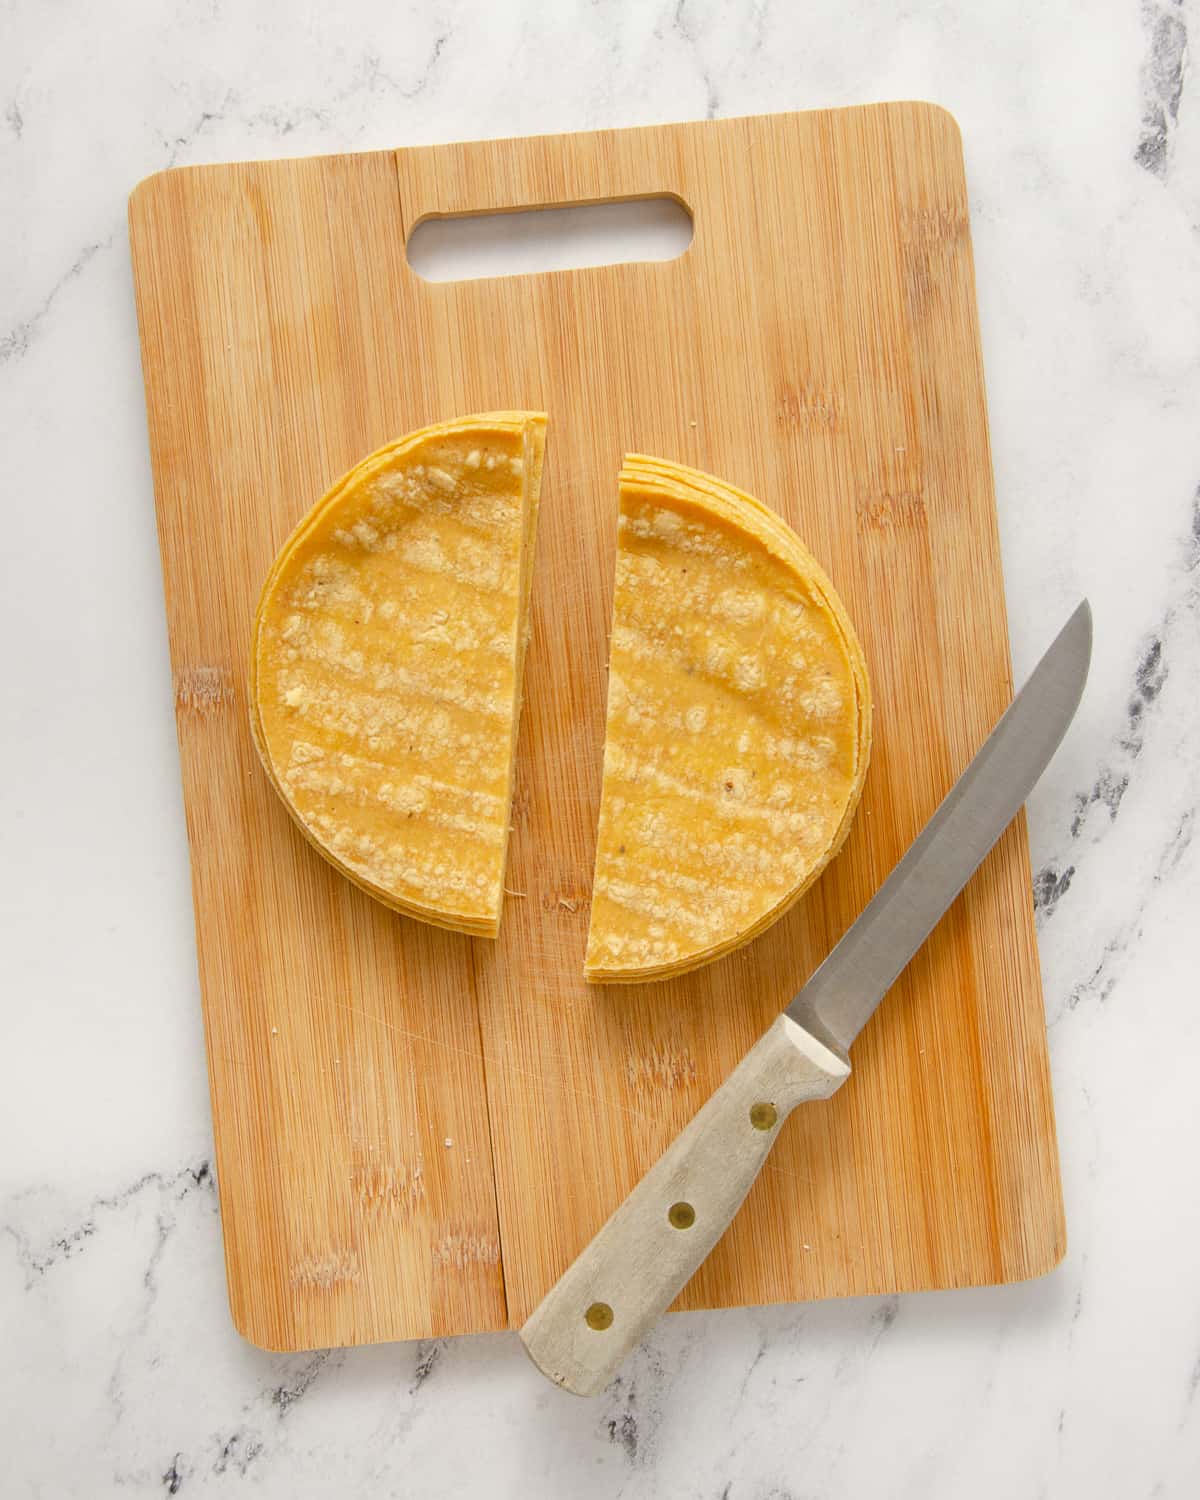 Corn tortillas cut in half on a cutting board.